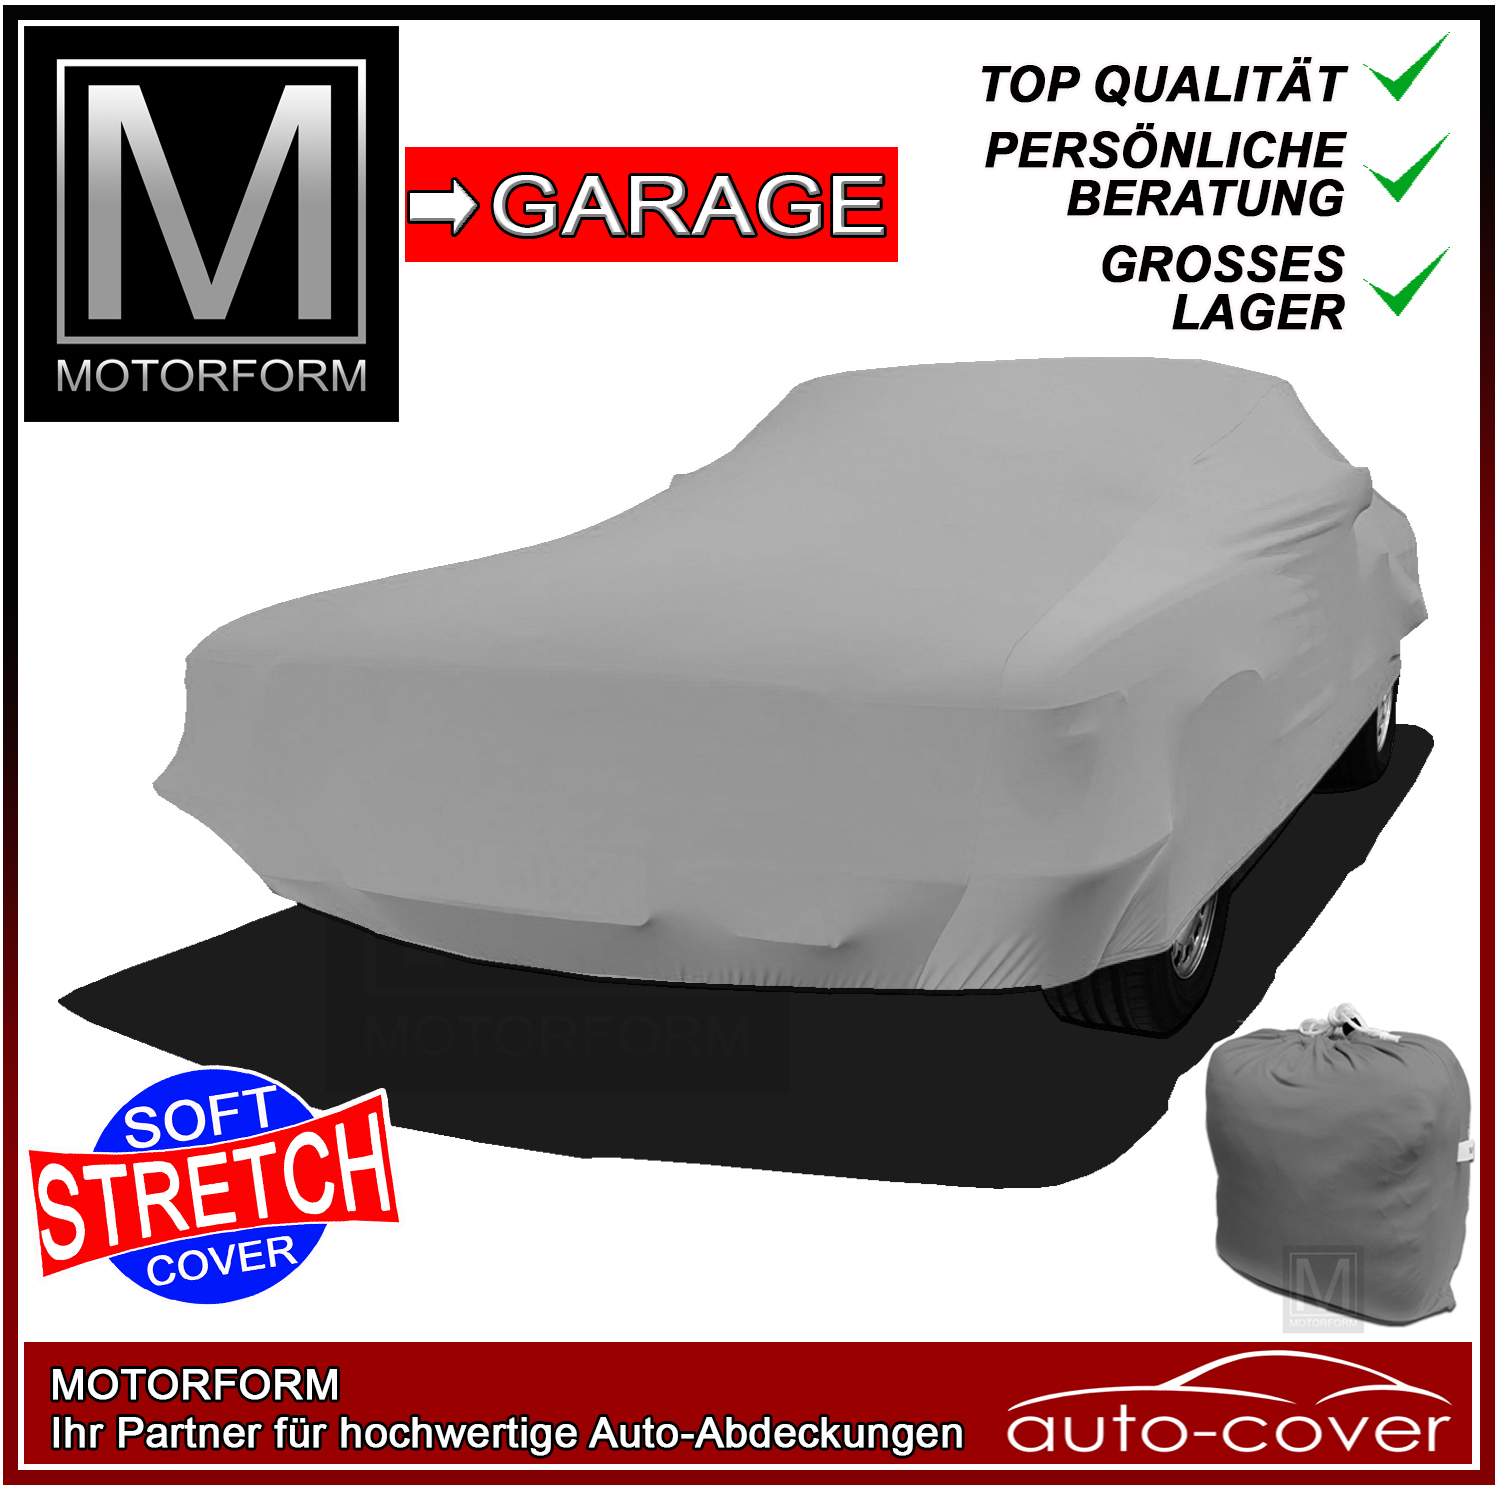 Grey Super Stretchy Cover for Mercedes S-Class Cabrio S500-S650 